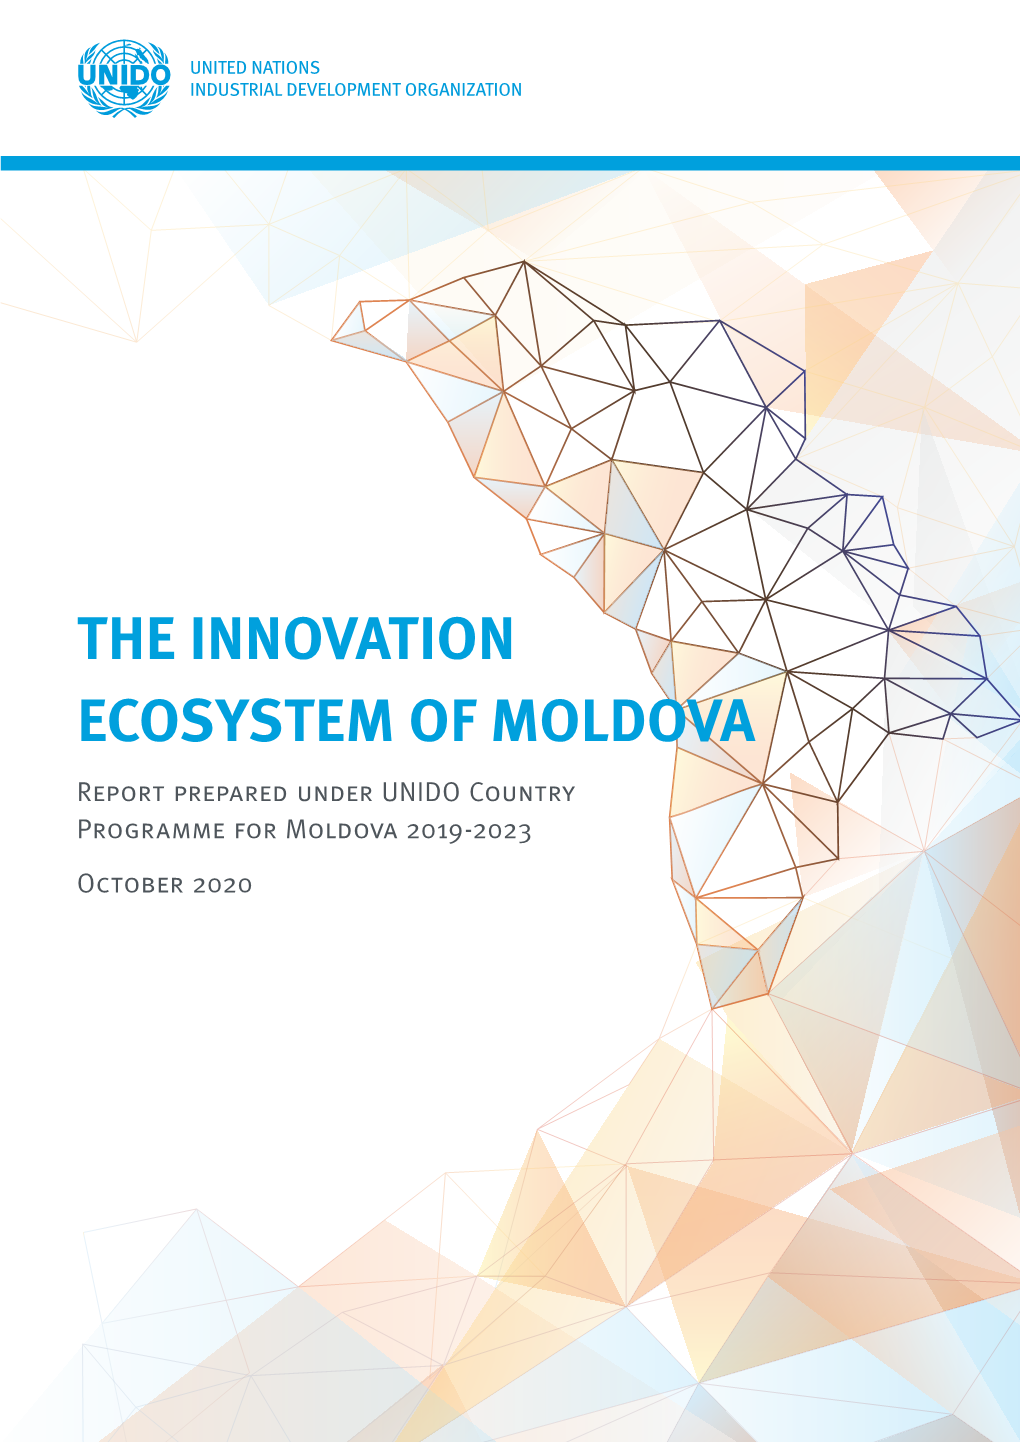 The Innovation Ecosystem of Moldova